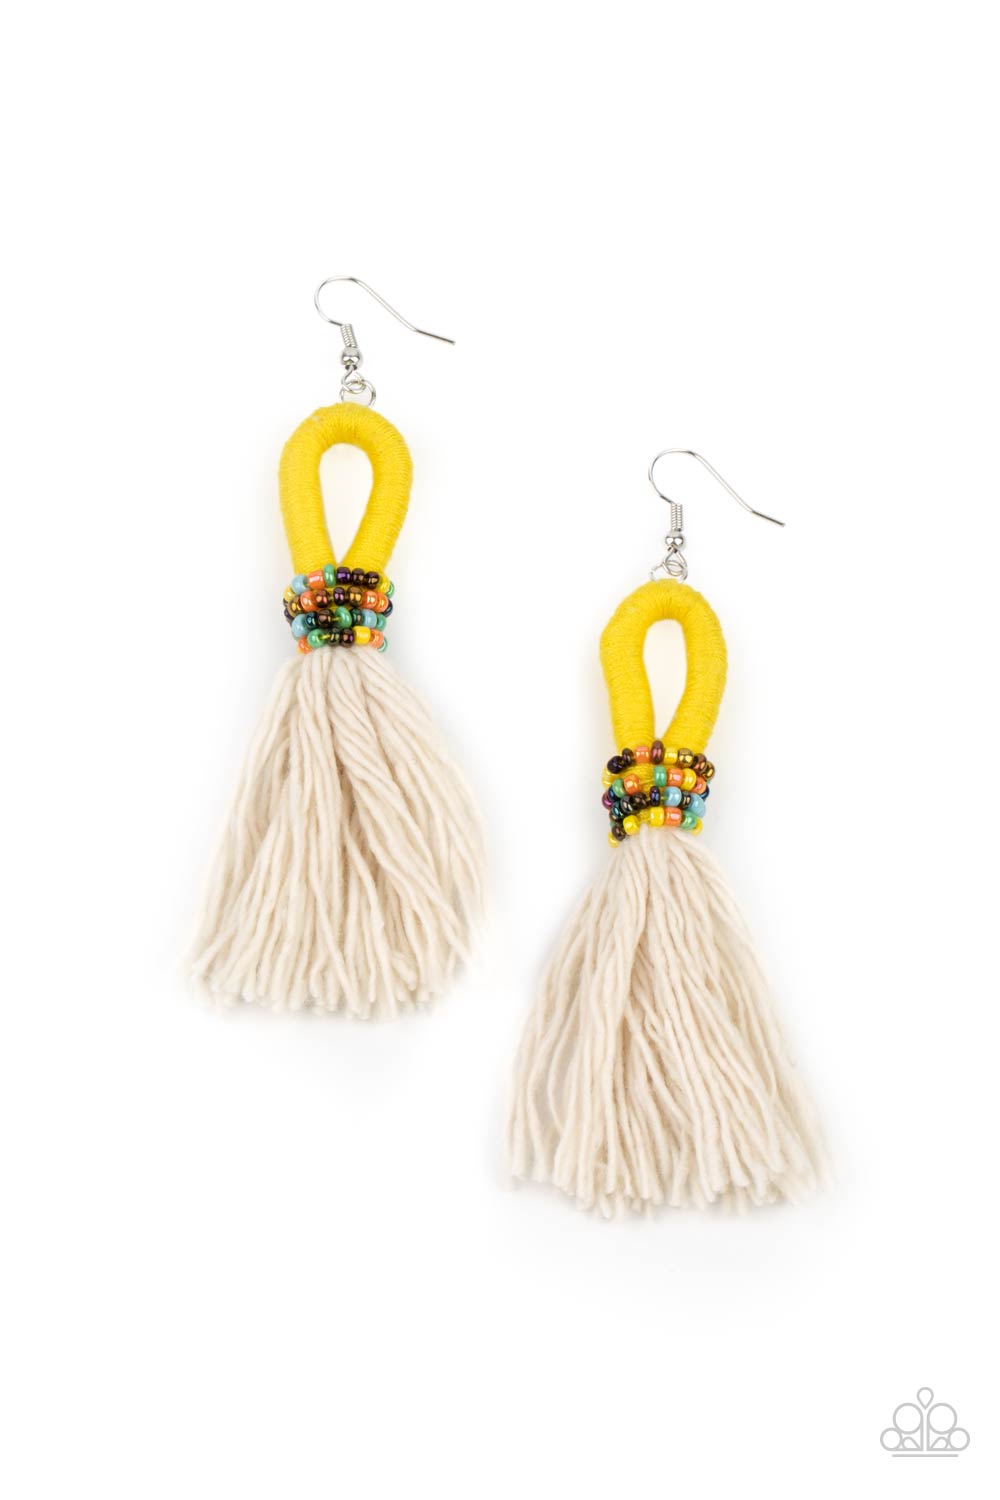 The Dustup - yellow - Paparazzi earrings